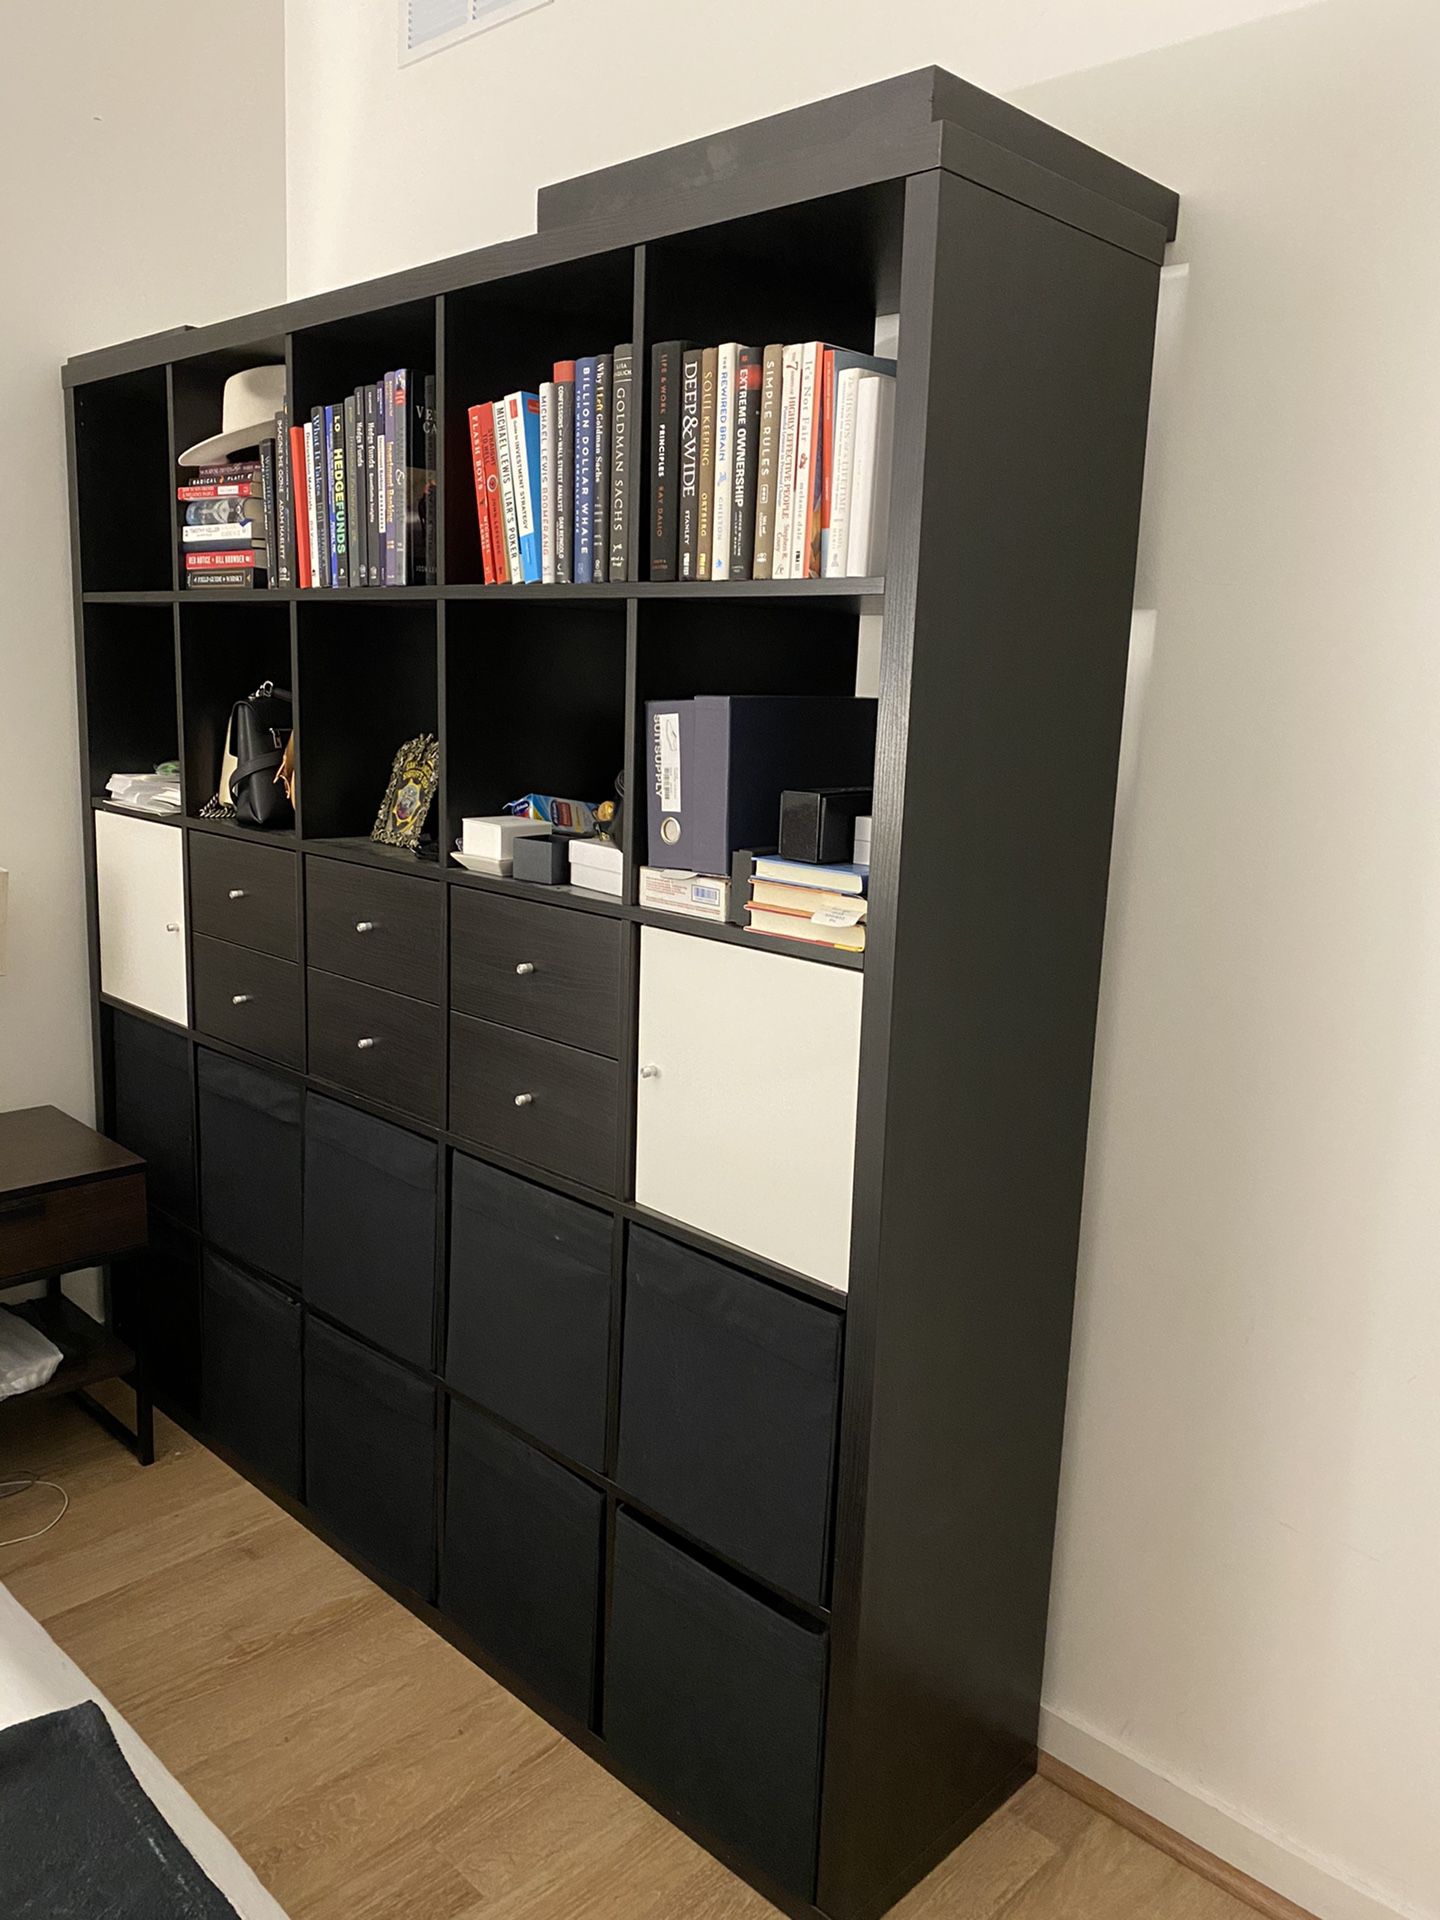 IKEA Bookshelf With 8 Bins, 6 Drawers, And 2 Cabinets